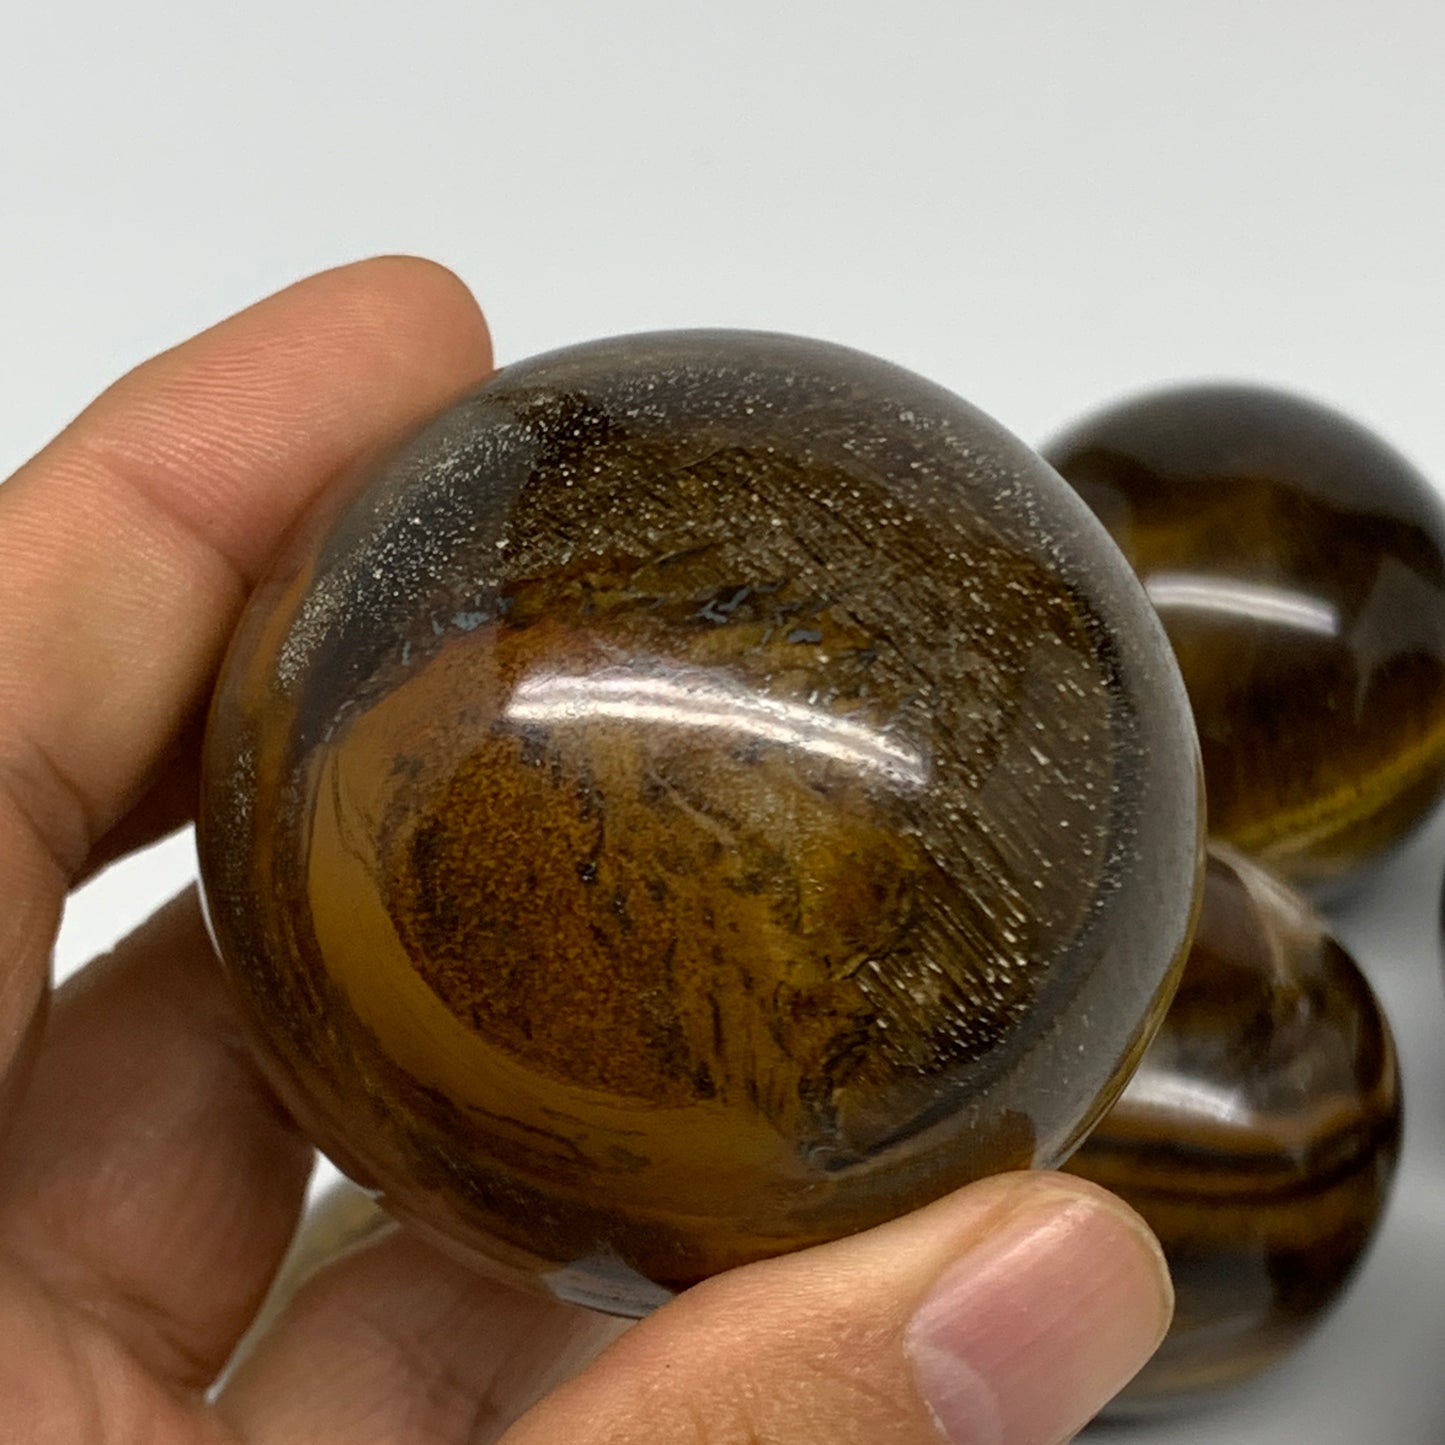 1150g, 1.9" - 2.1", 6pcs, Tiger's Eye Spheres Gemstones @India, B25057